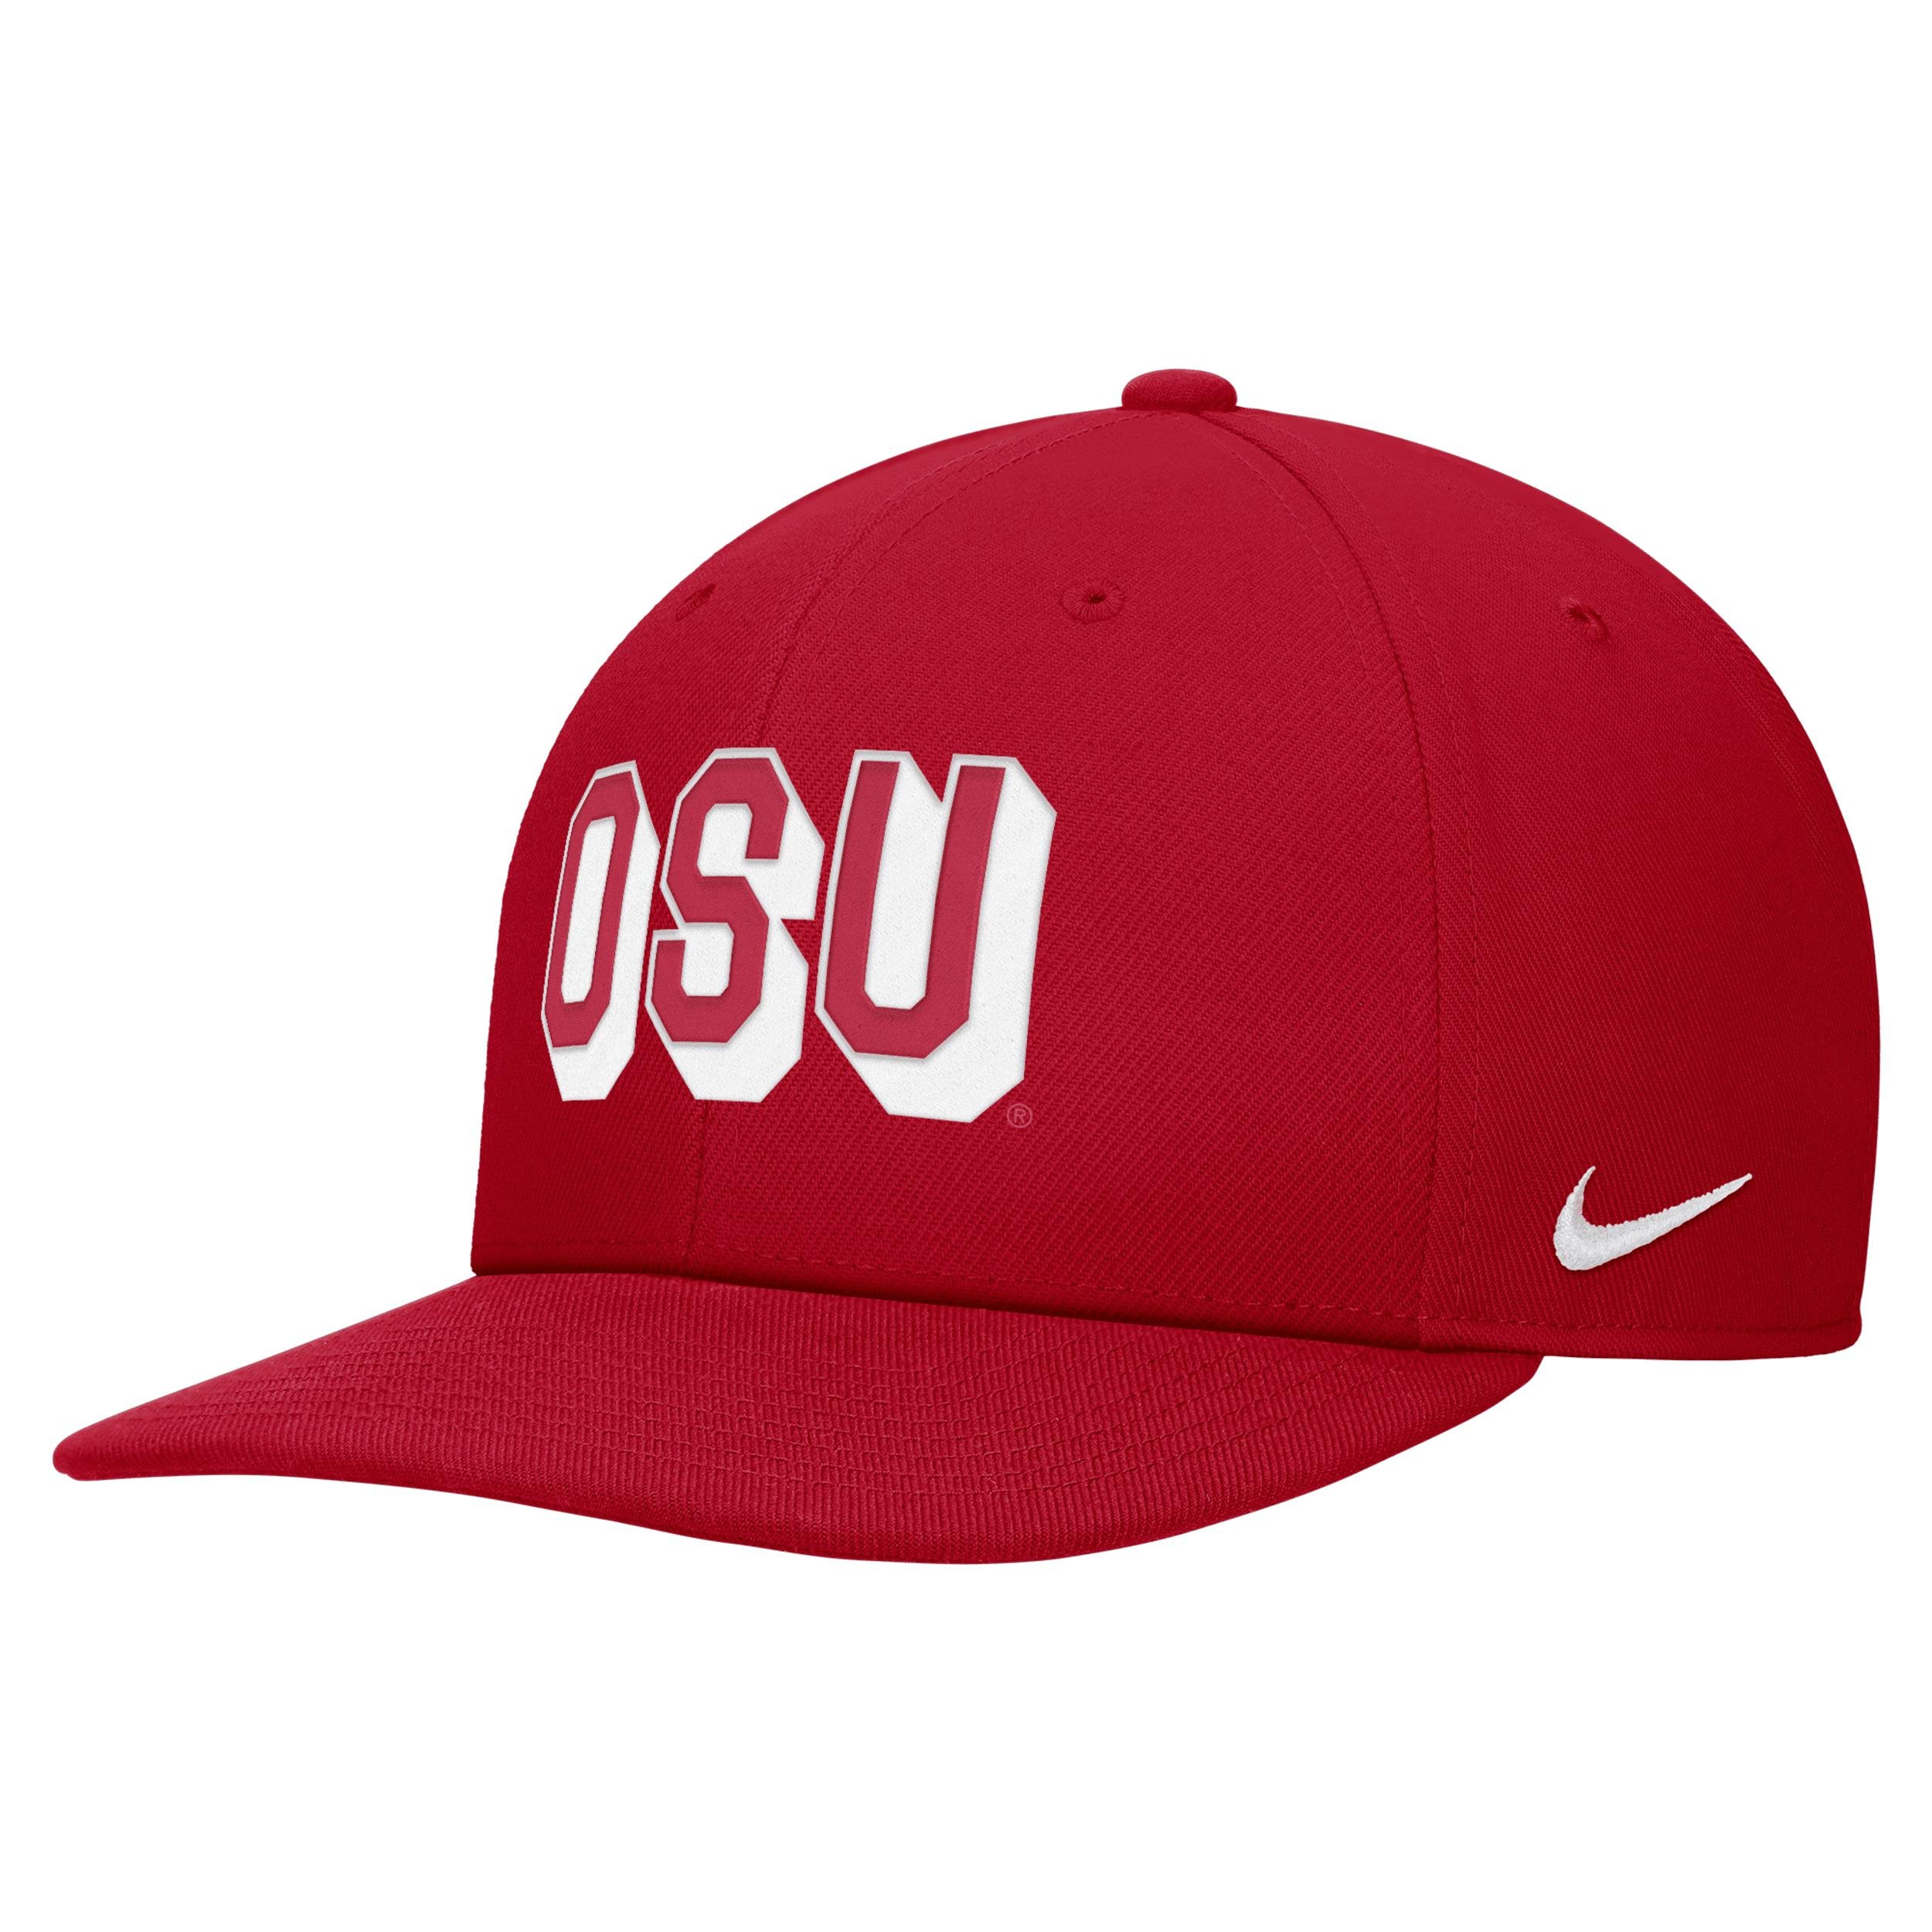 Ohio State Nike Unisex College Snapback Hat by NIKE